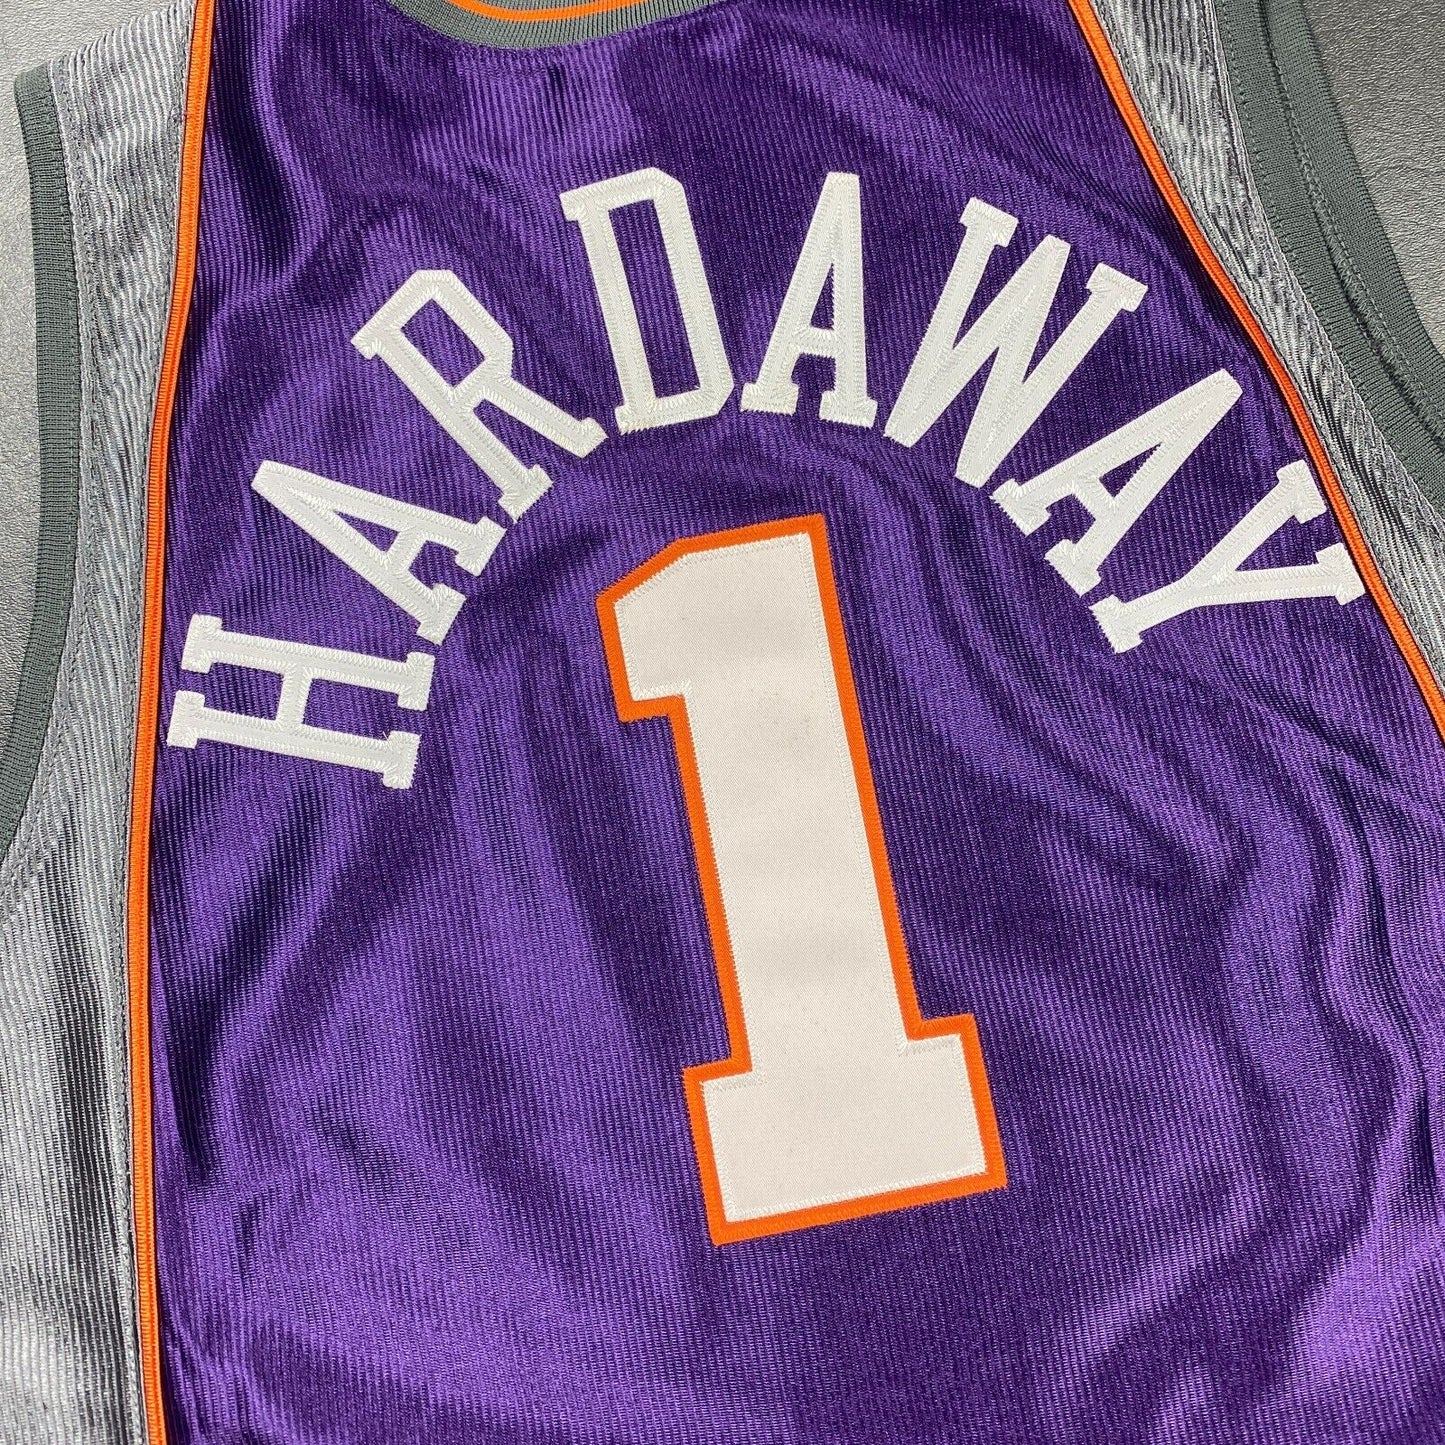 100% Authentic Penny Hardaway Vintage Champion Phoenix Suns Jersey Size 44 L XL